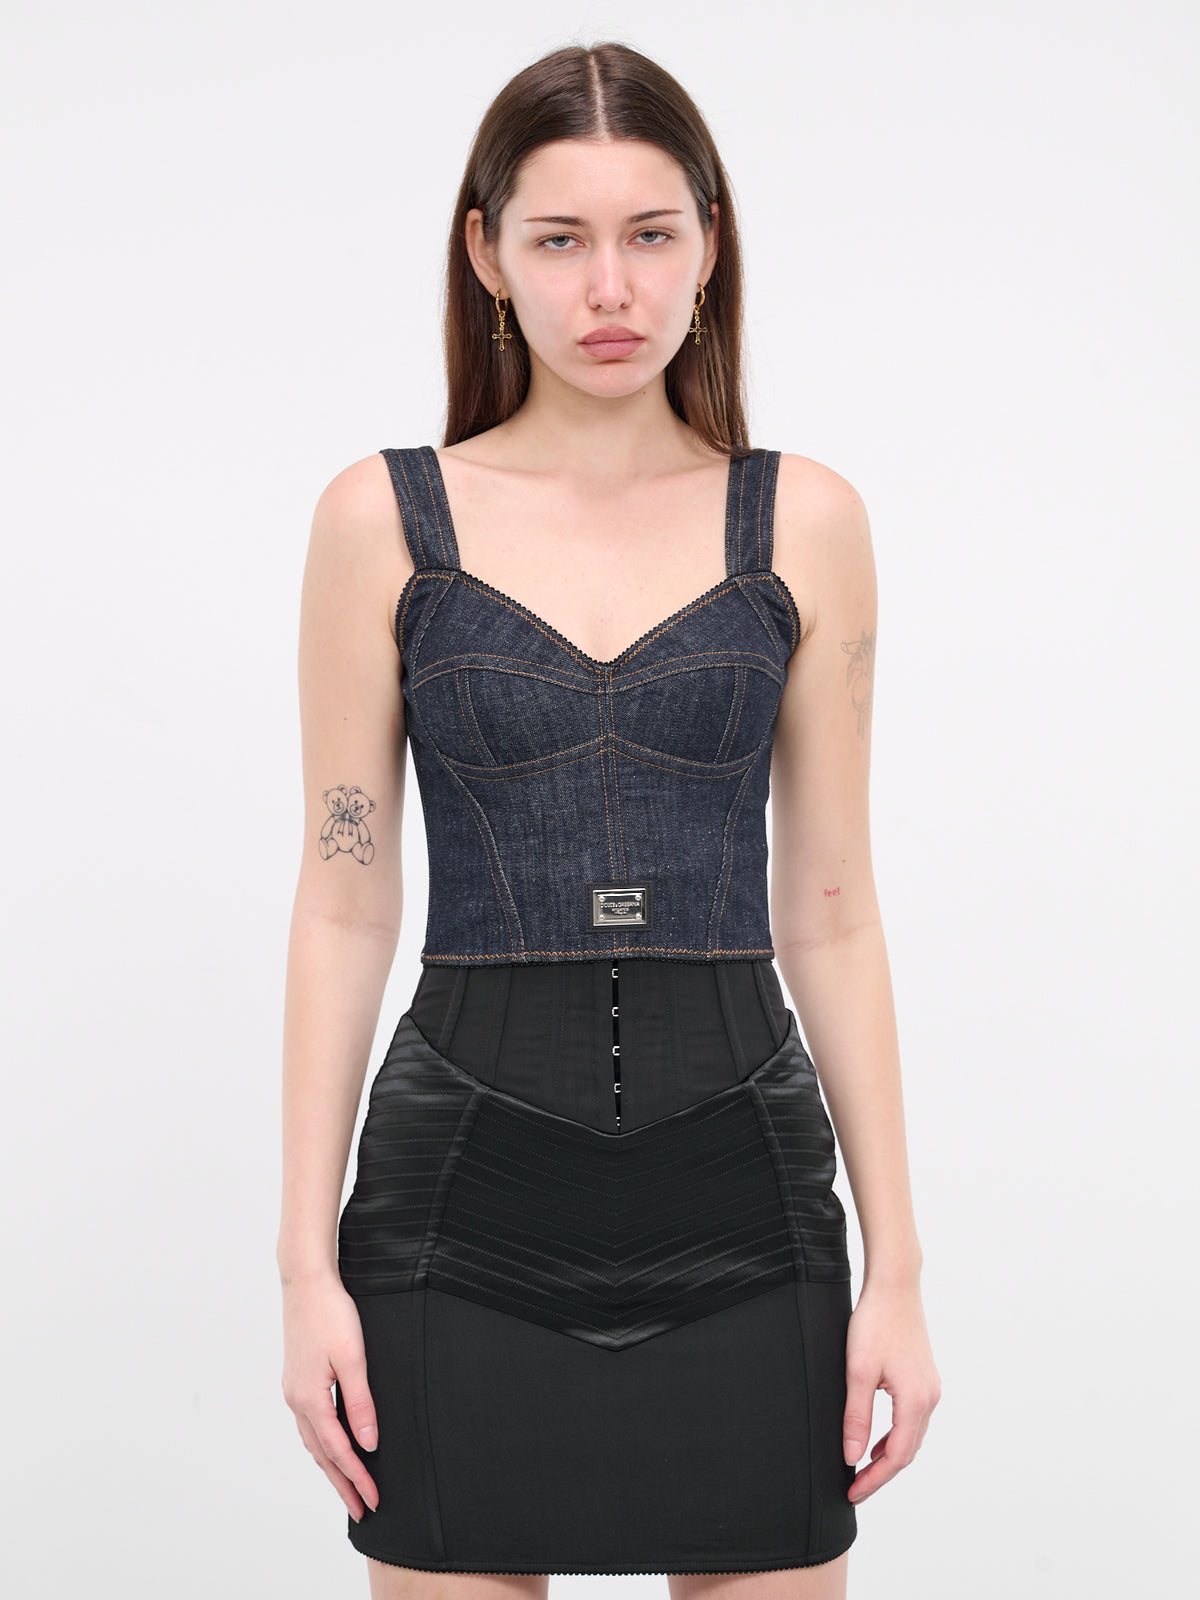 Del Luvra The Pia Denim Lace Up Corset Top NWT Black Size Small Retail $209